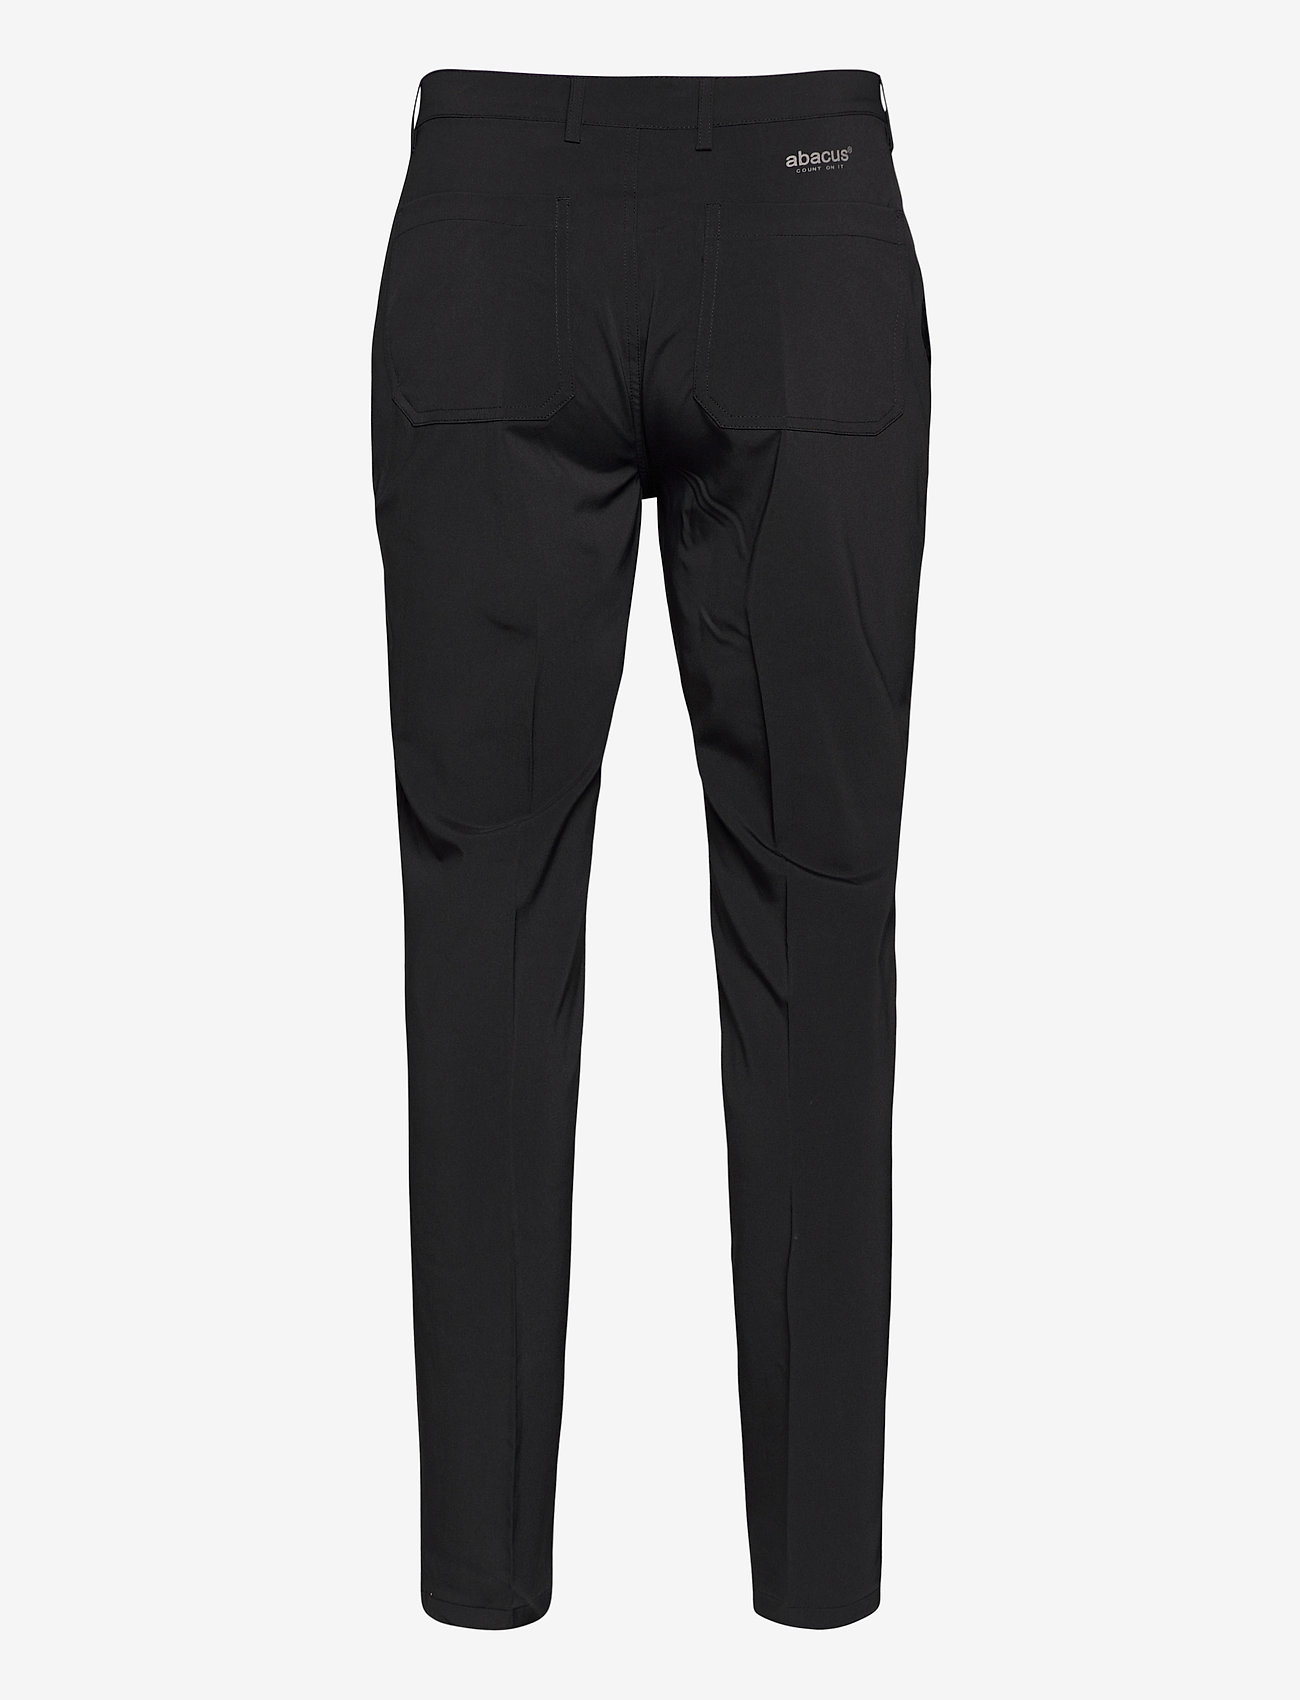 Abacus - Mens Cleek stretch trousers - golfhousut - black - 1